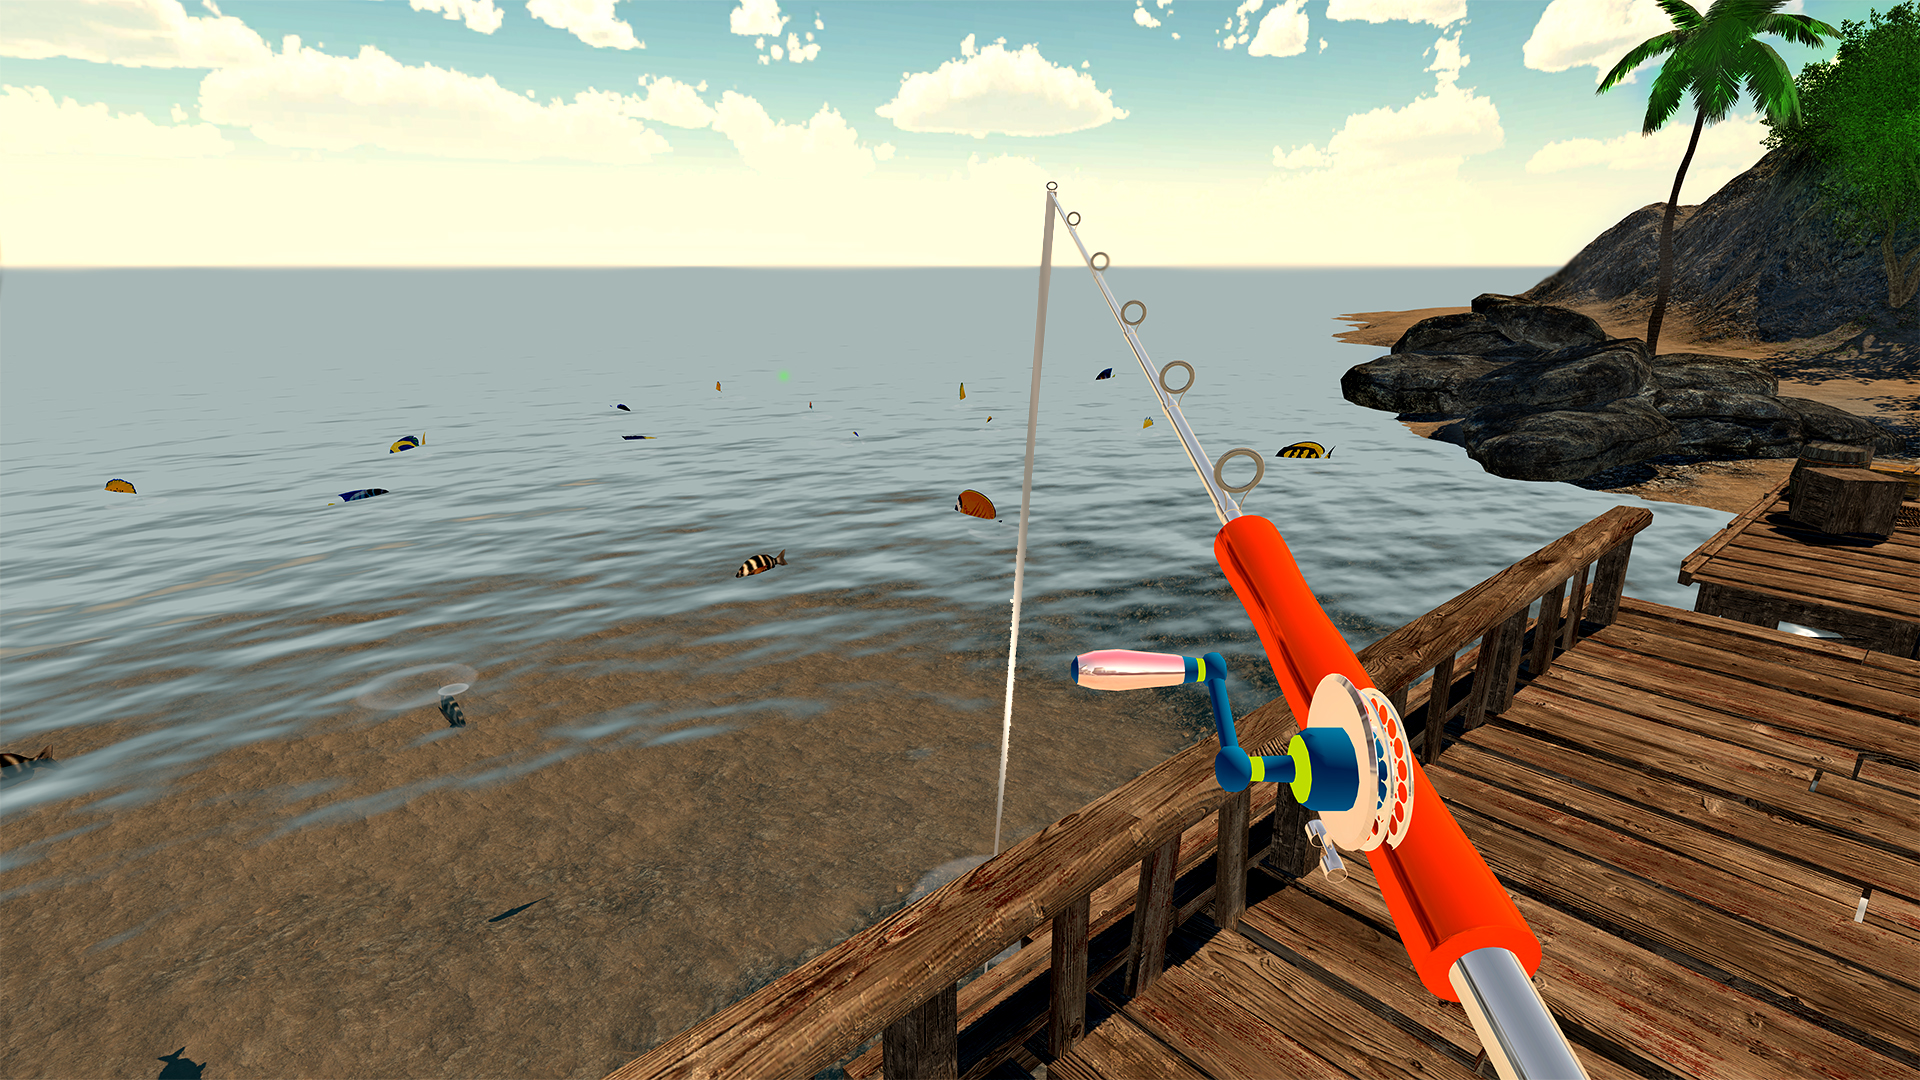 Steam Community :: Pro Fishing Simulator